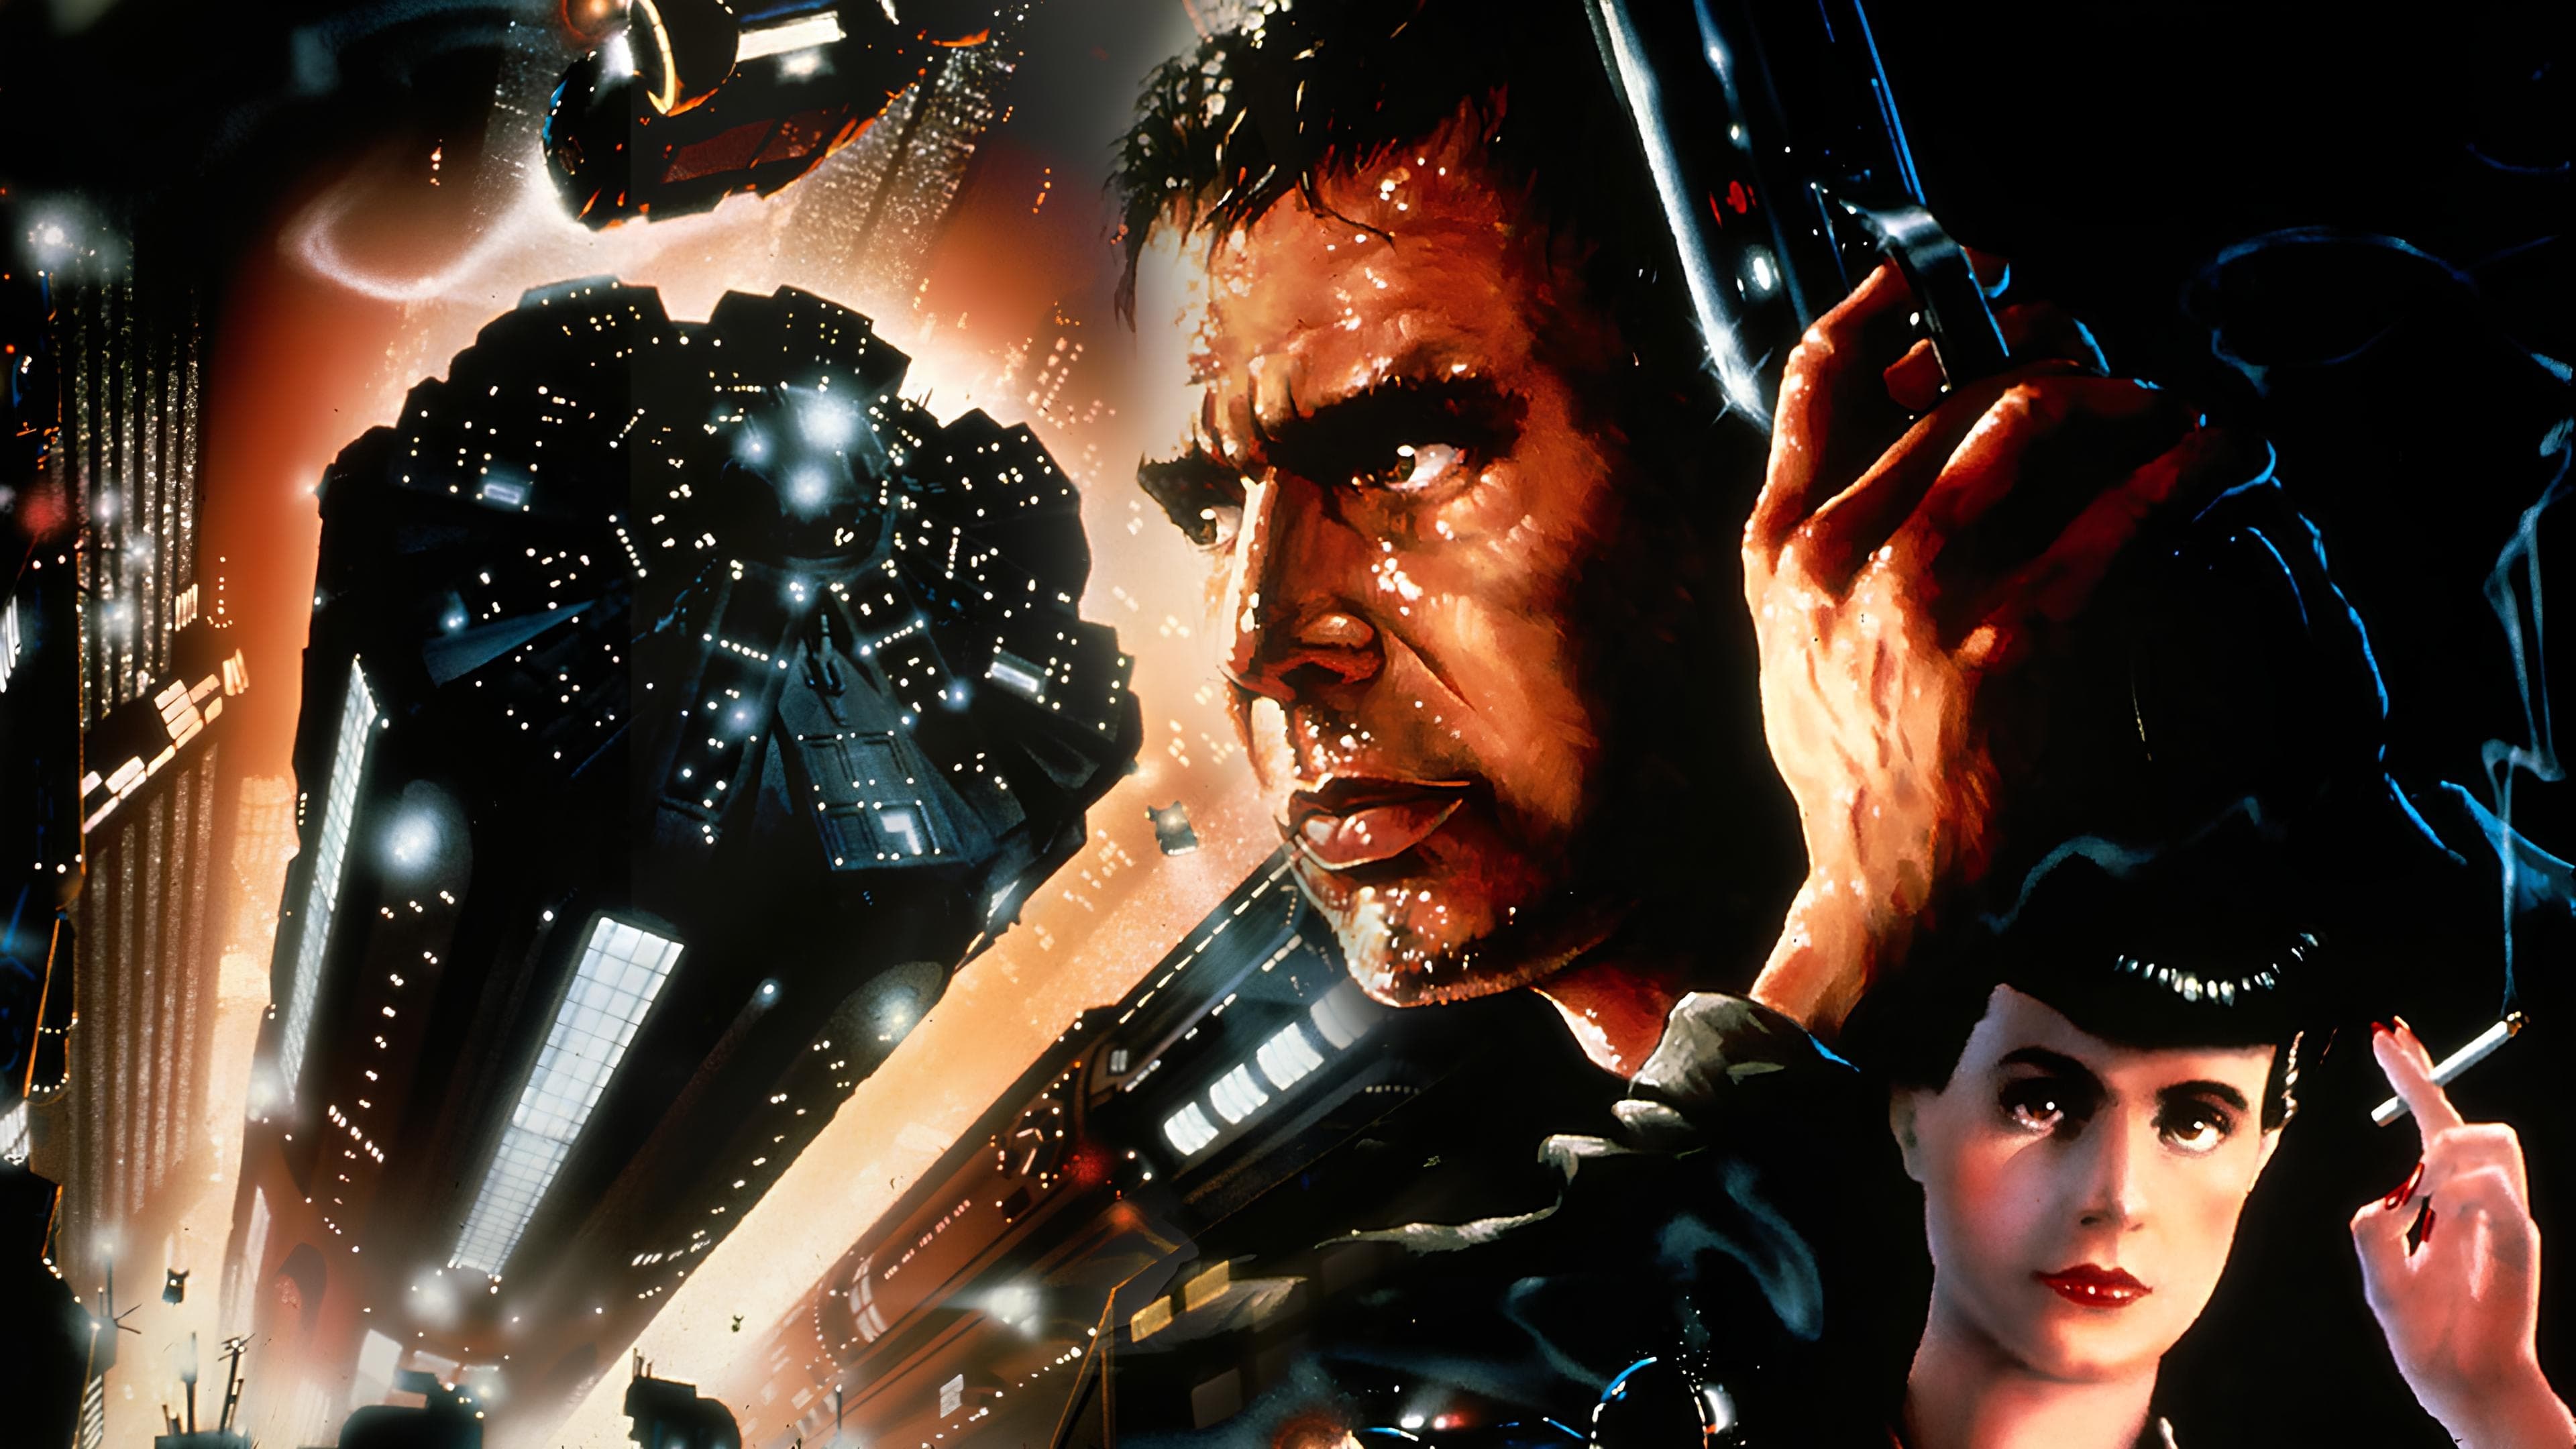 Image du film Blade Runner (Final Cut) qr7duqlemrd0vgollazbmyp9xjijpg